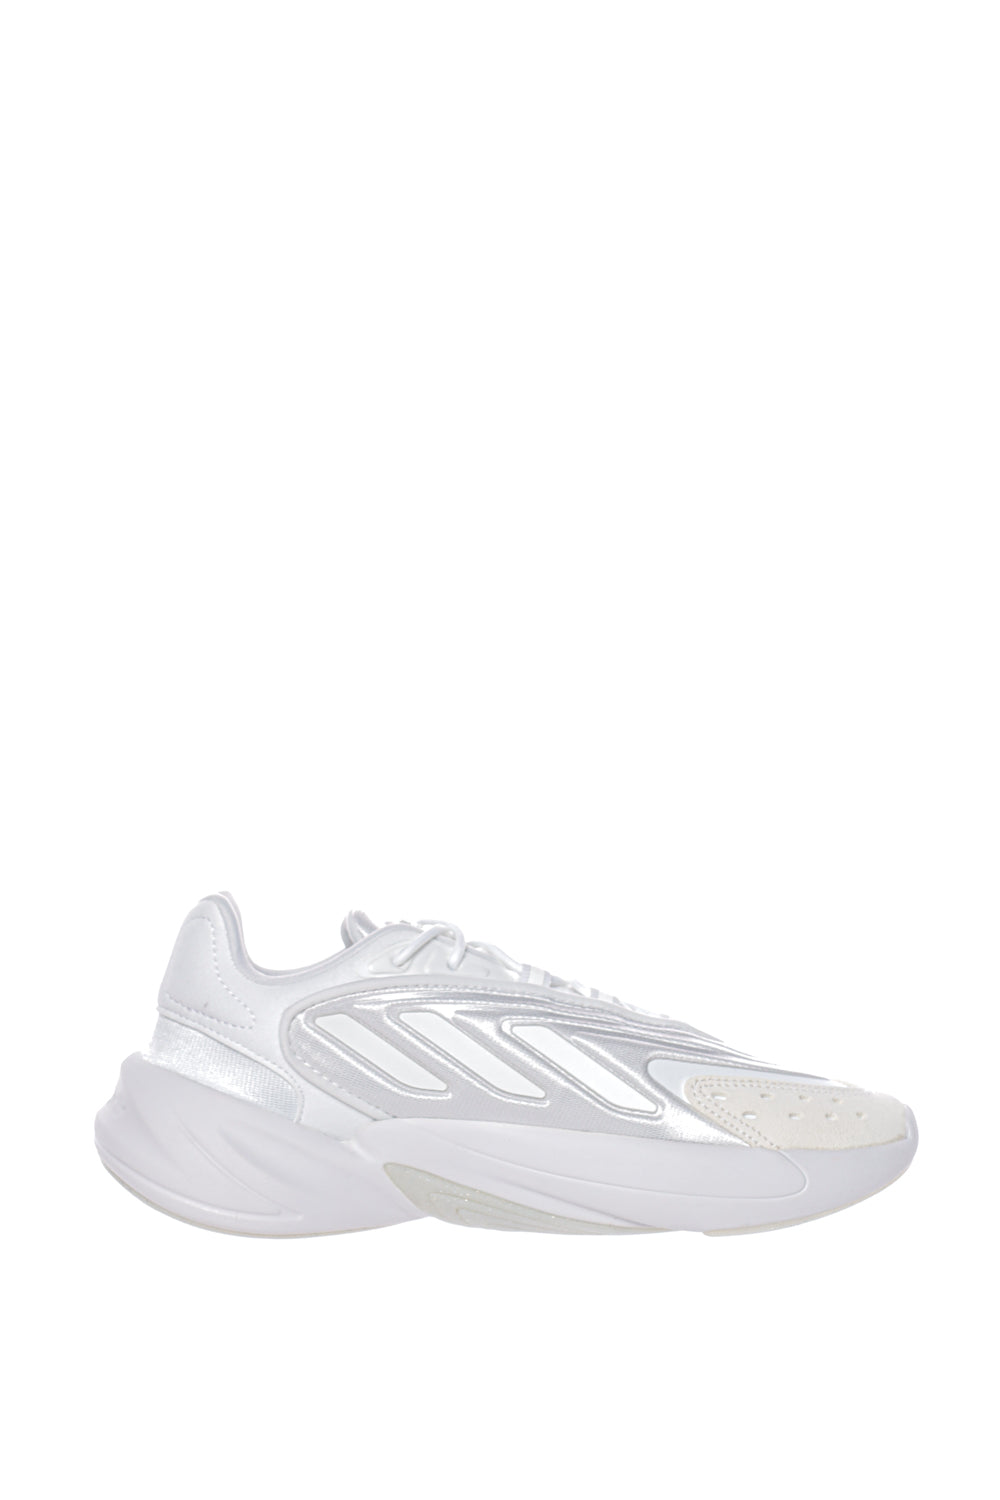 Pantofi sport albi Adidas Ozelia - imagine laterala